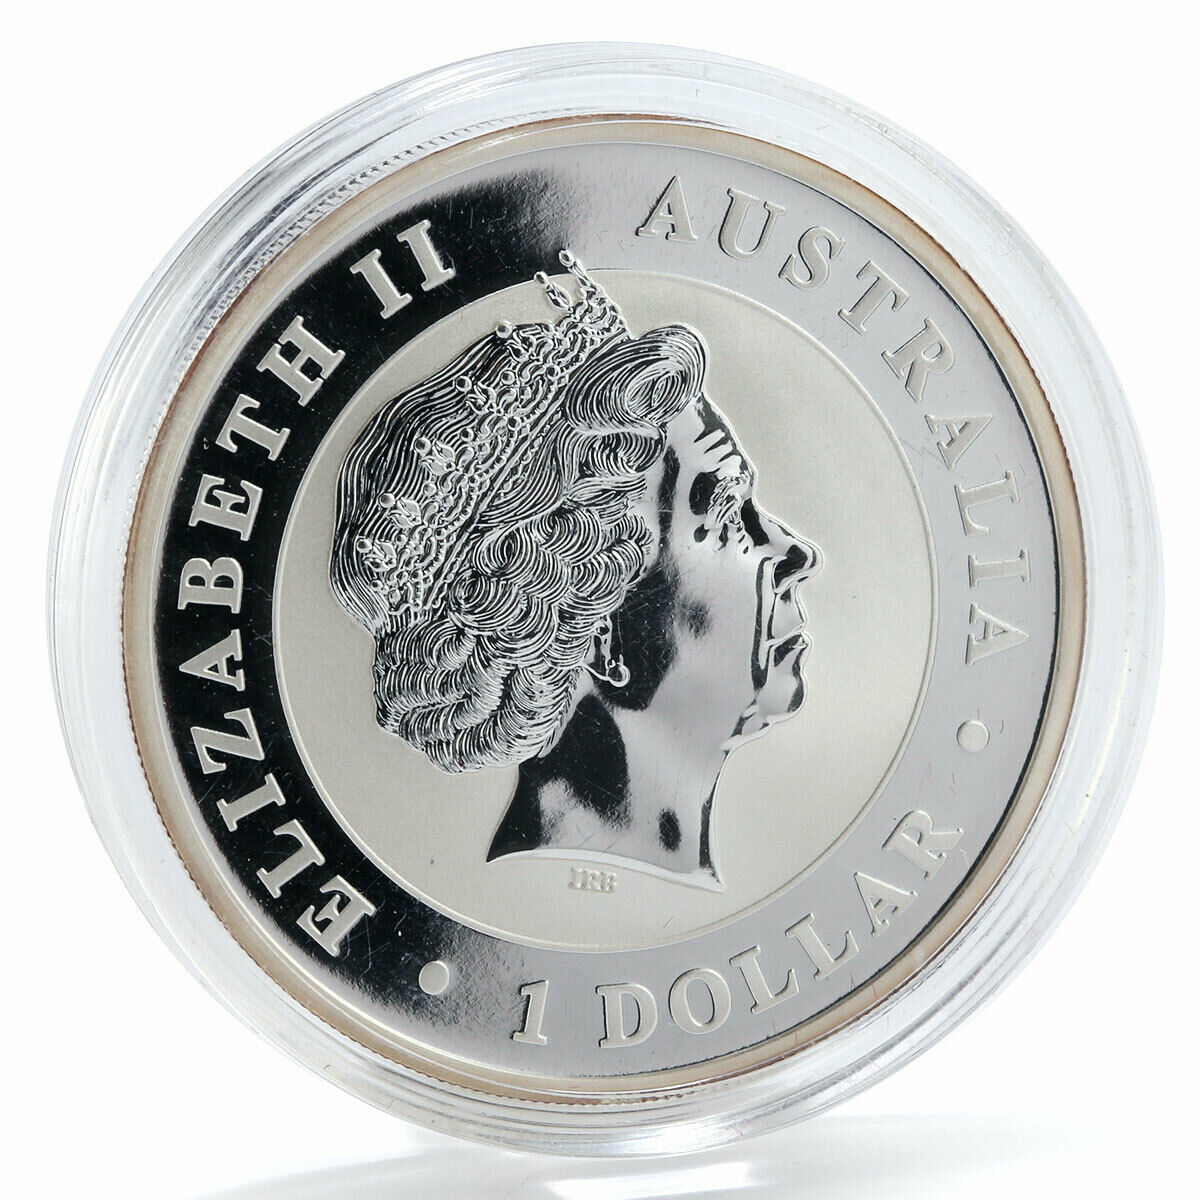 Australia 1 dollar Koala proof silver coin 2011